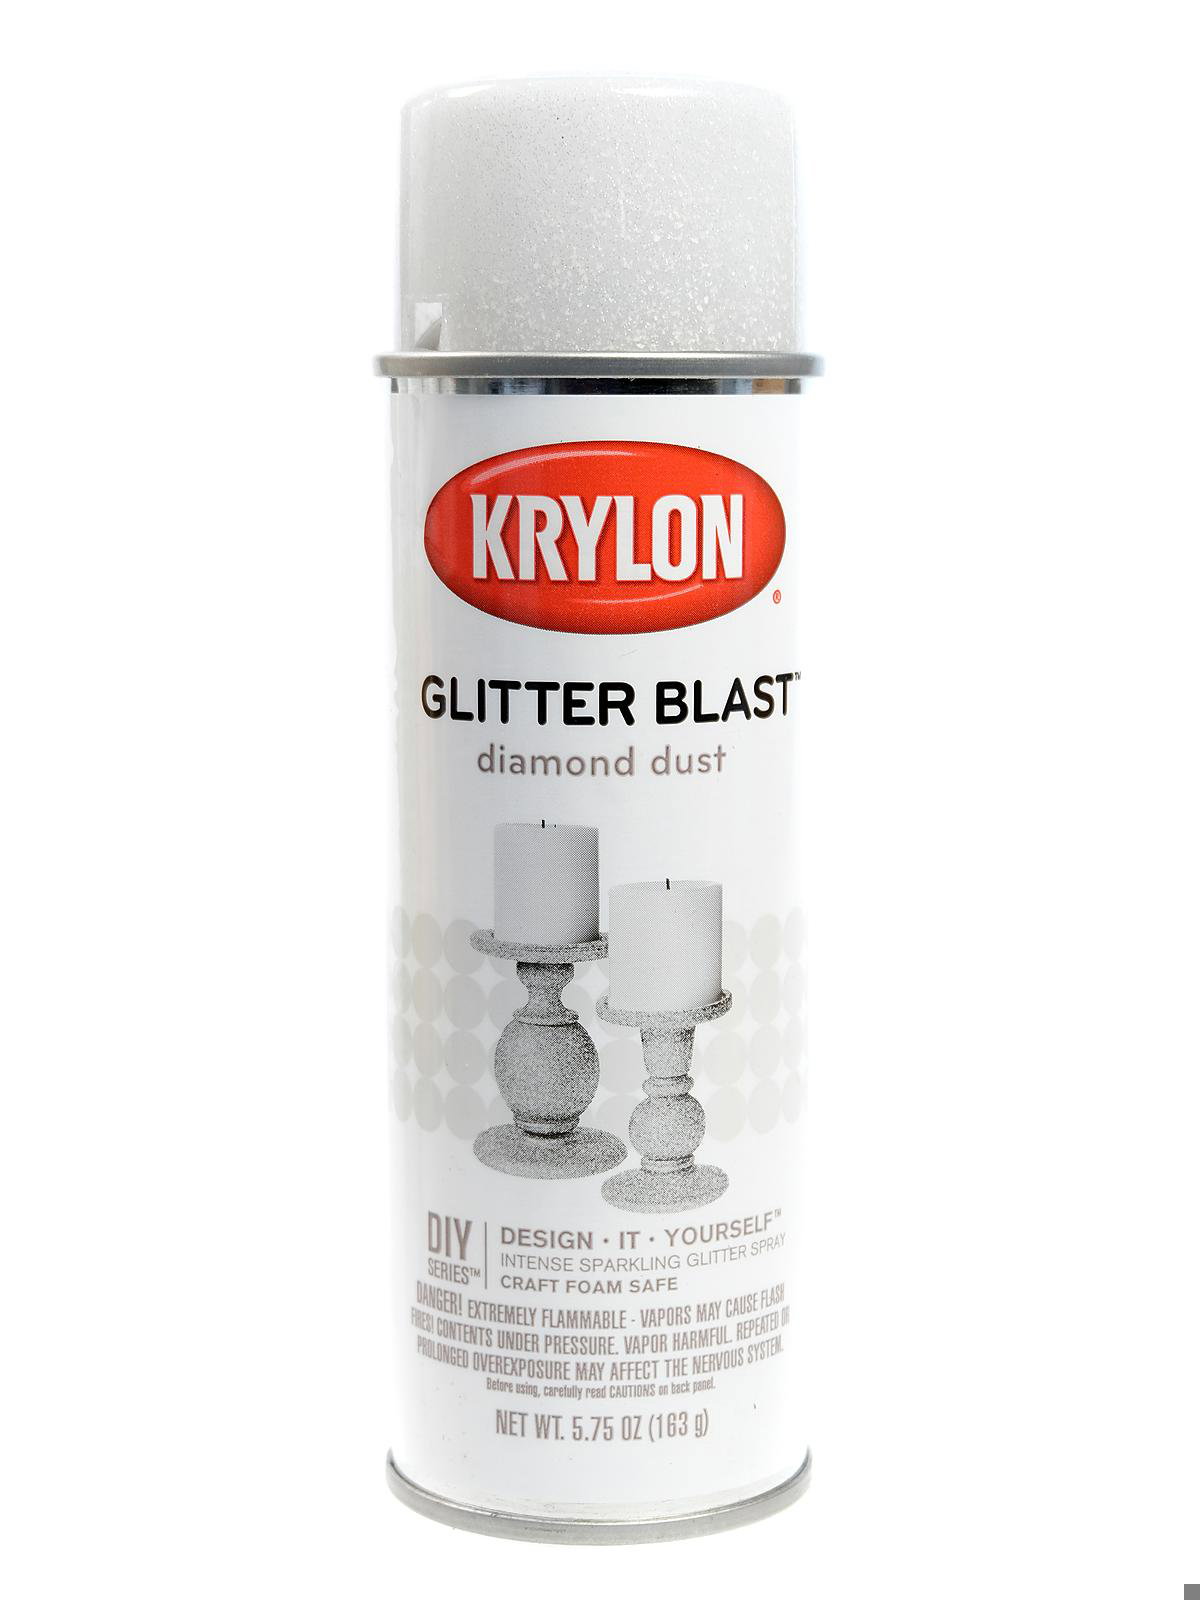 Krylon Glitter Blast DIAMOND DUST Glitter Spray Can 5.75oz